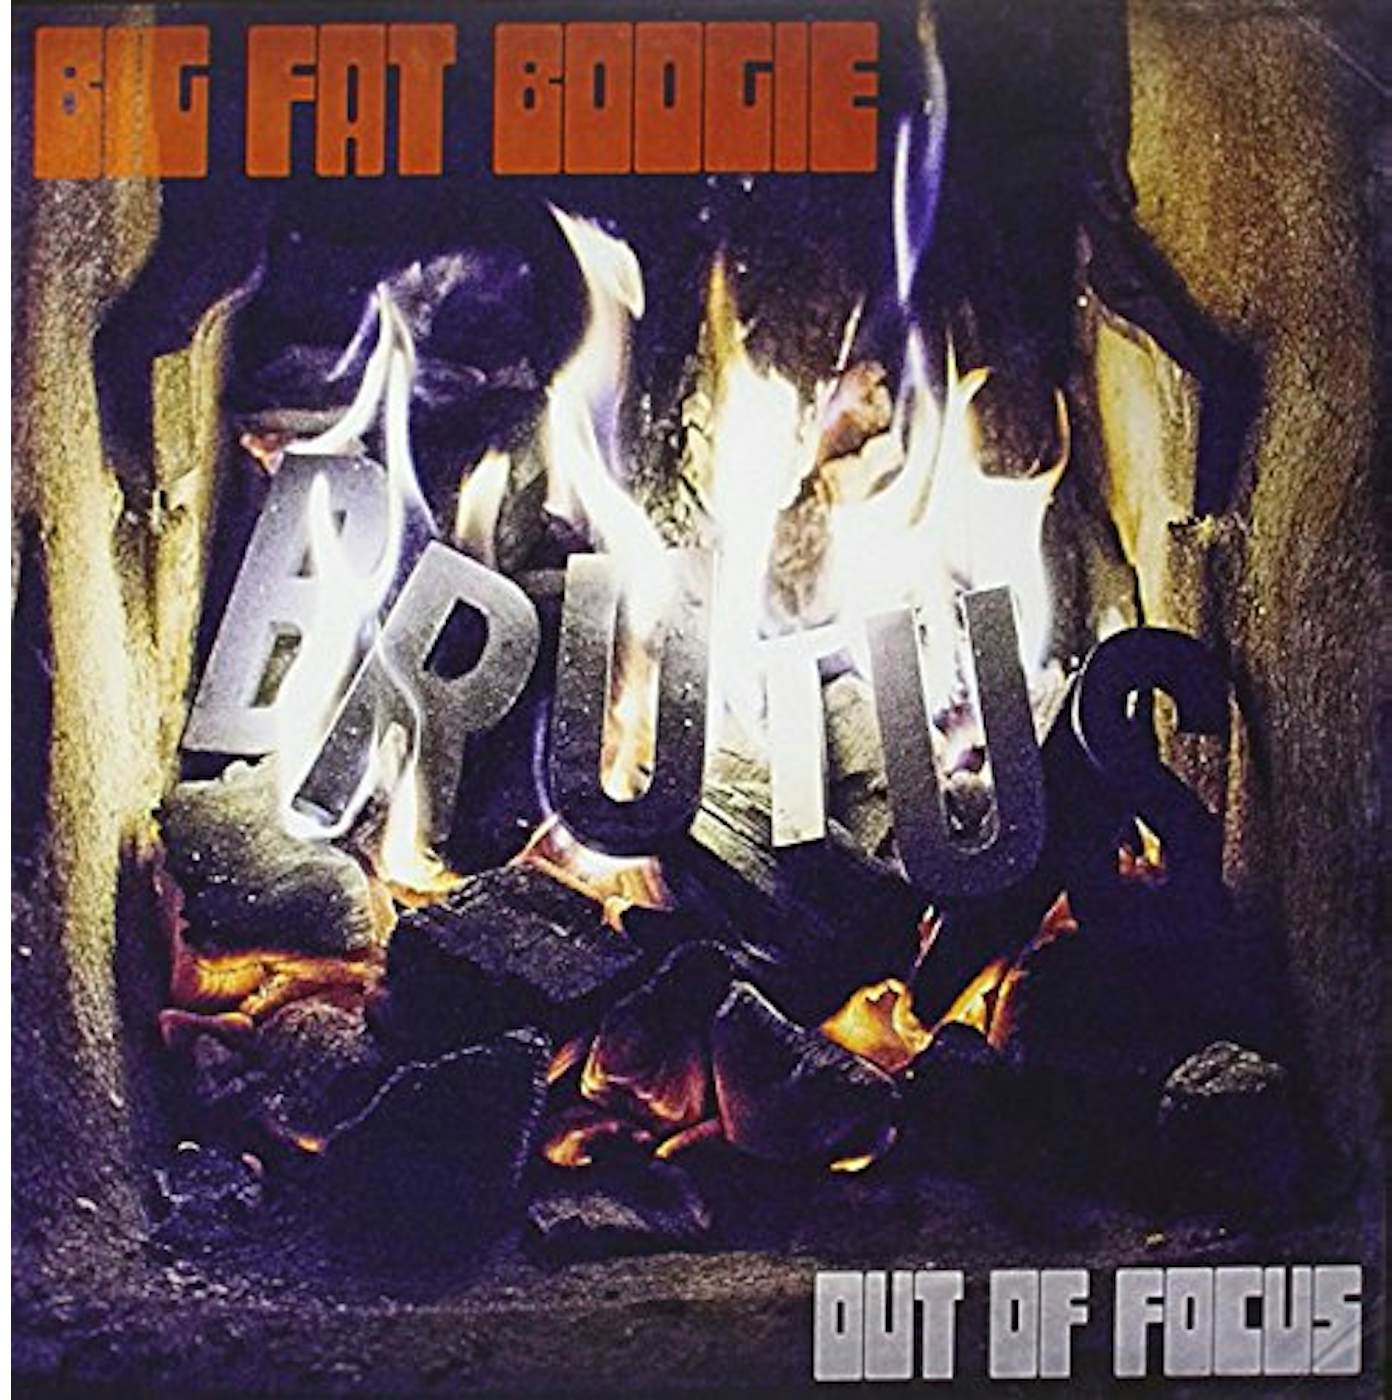 Brutus BIG FAT BOOGIE Vinyl Record